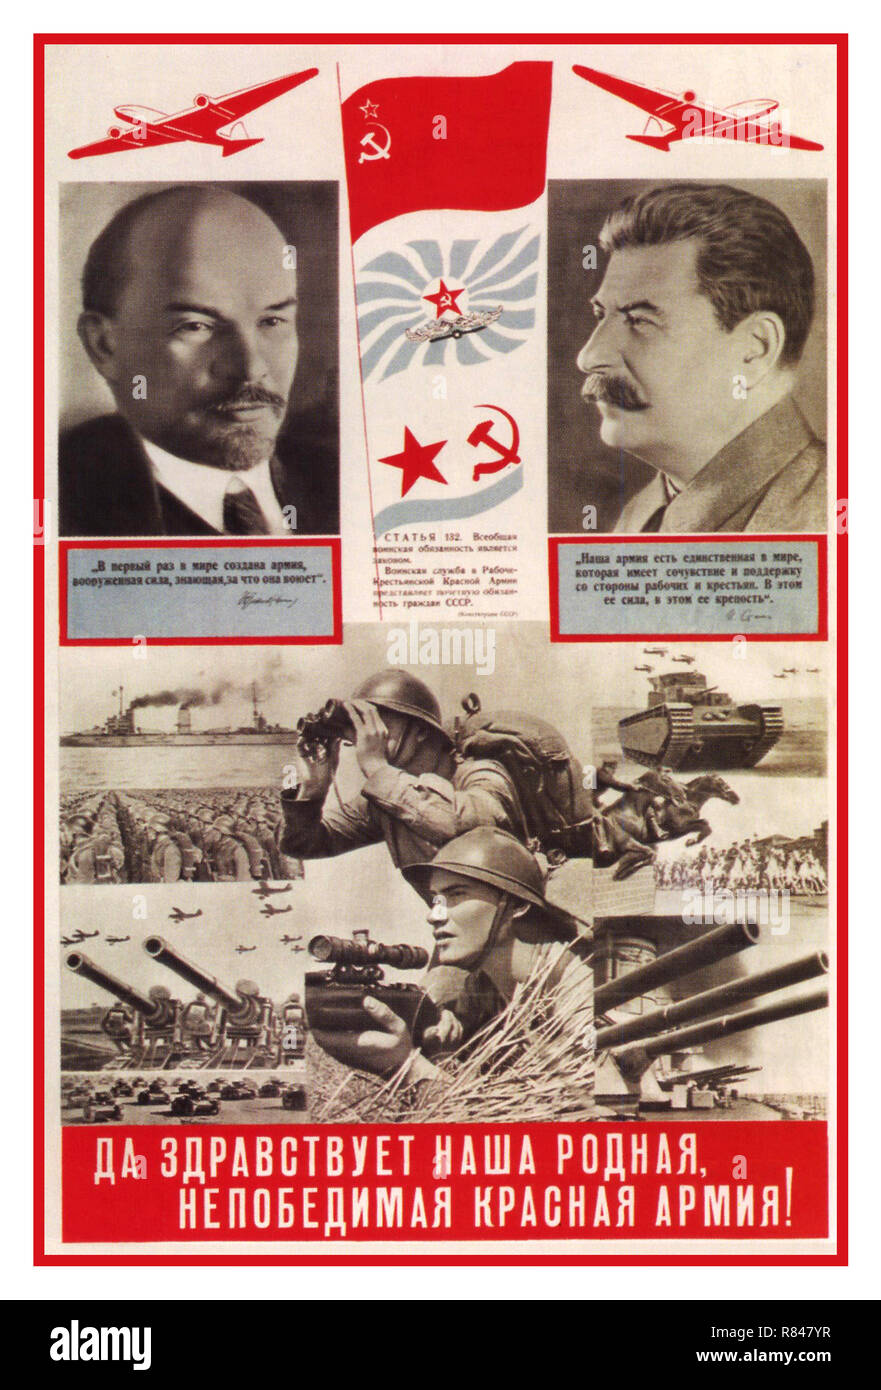 Vintage URSS soviético ruso WW2 cartel propagandístico. 